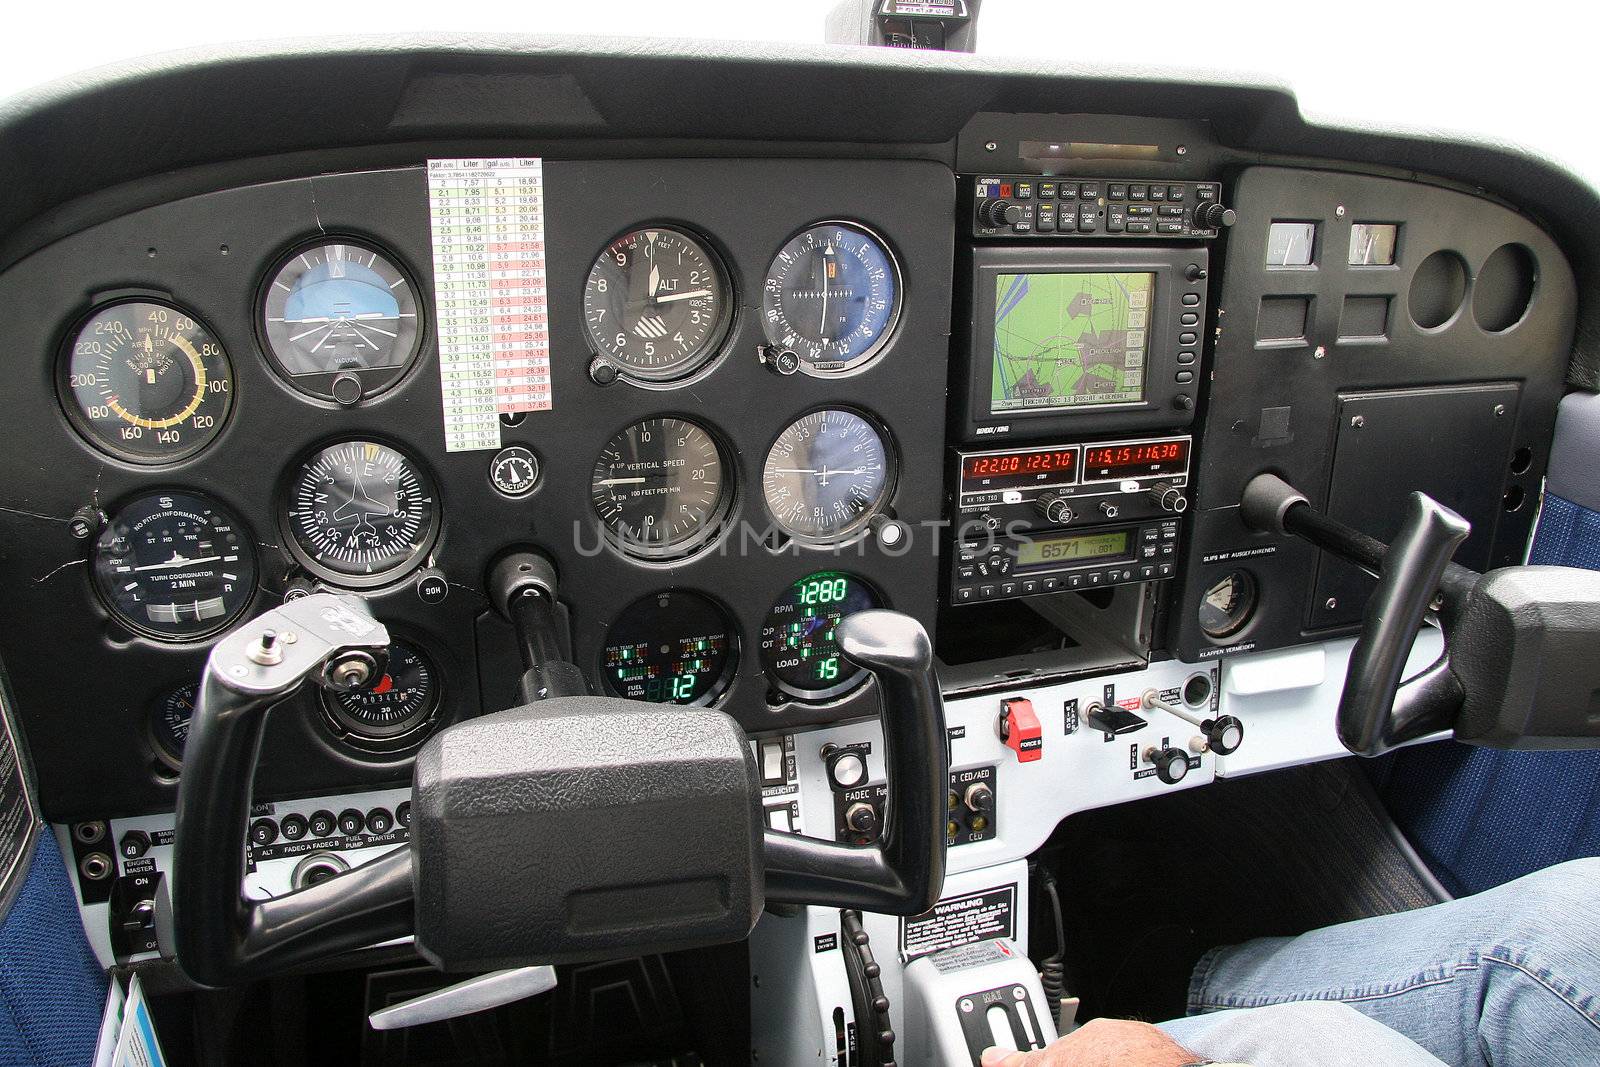 Cockpit of a small aircraft by Farina6000